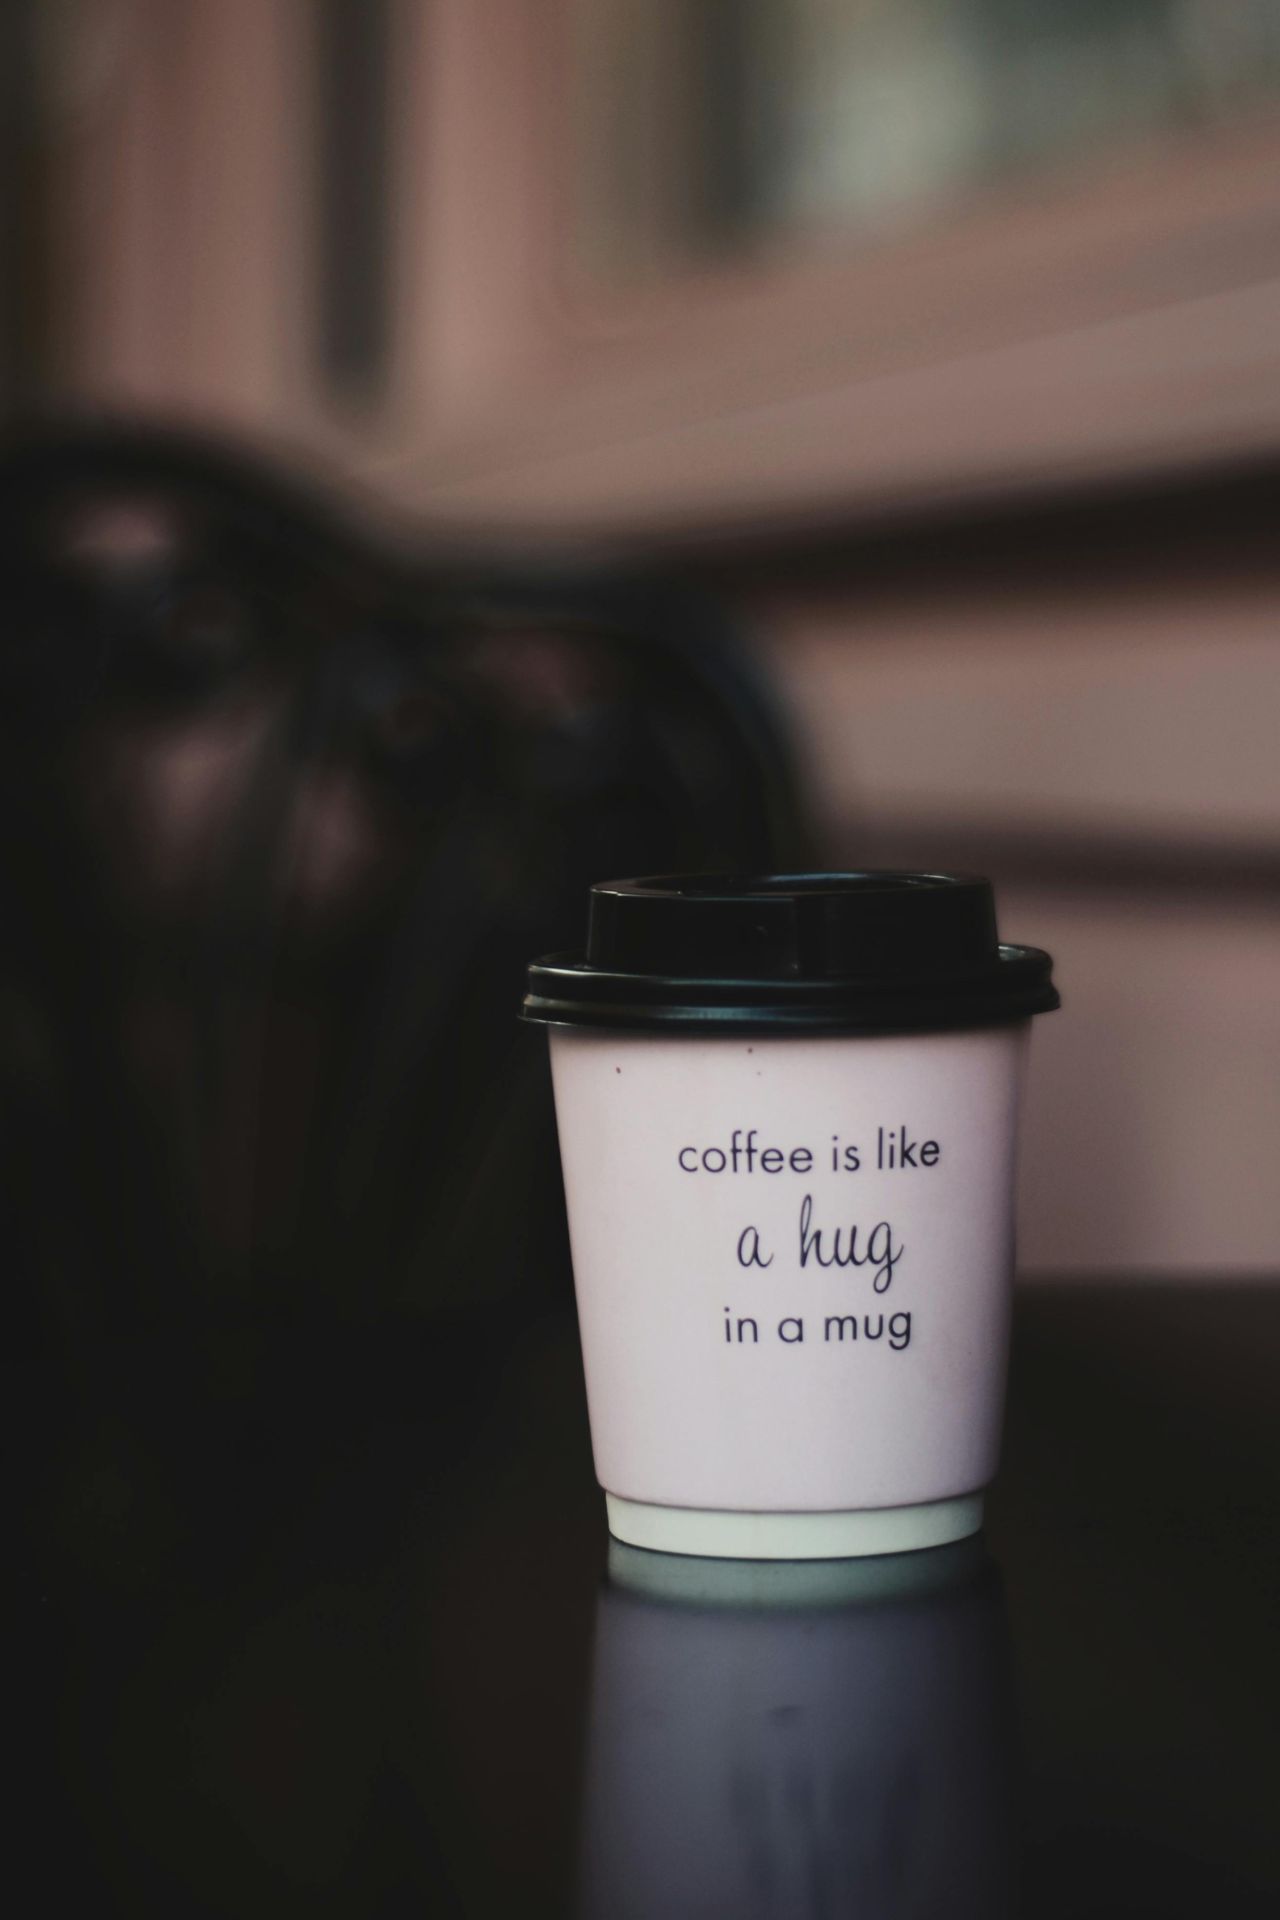 Guten-Morgen-Spruch auf Kaffetasse: Coffee is like a hug in a mug.